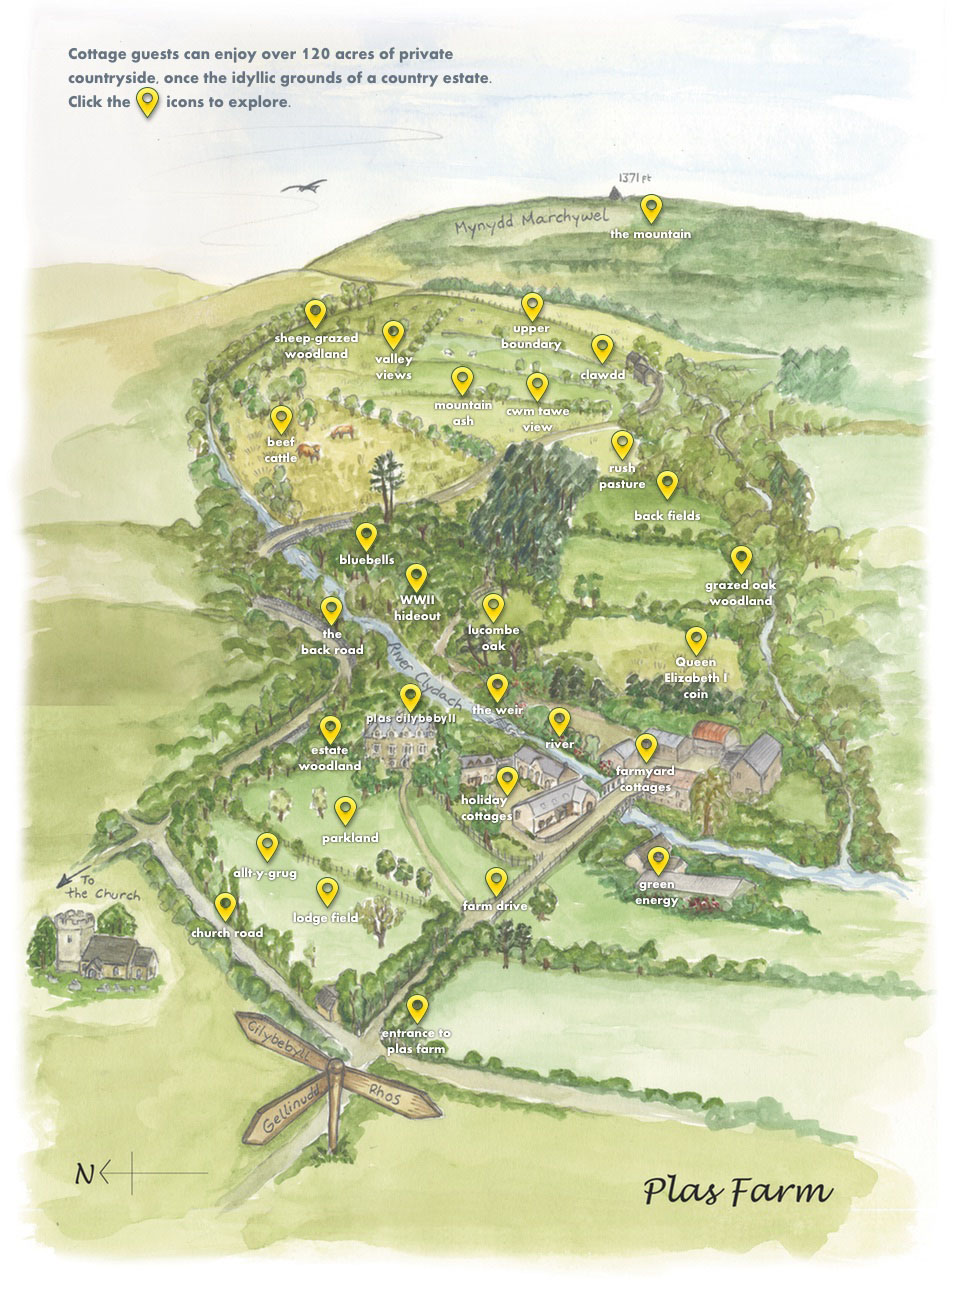 Plas Farm illustrated map